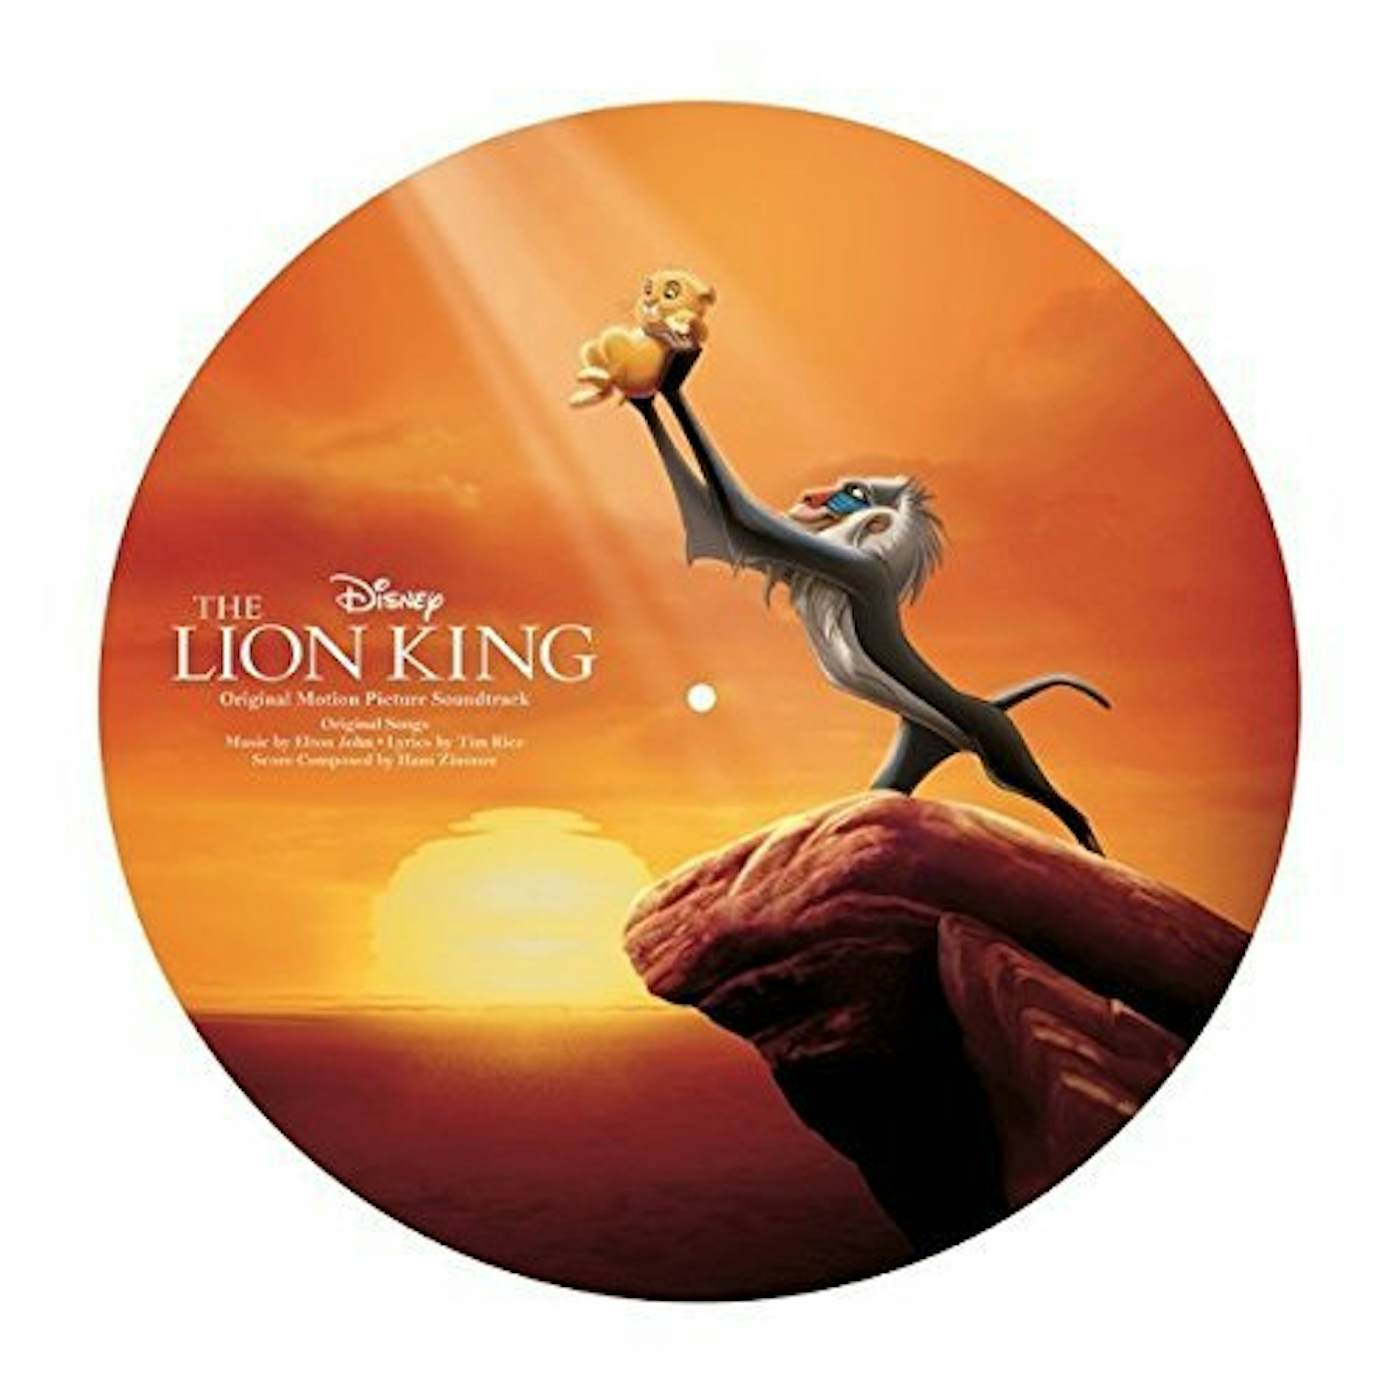 LION KING / Original Soundtrack Limited Edition Picture Disc Vinyl Record